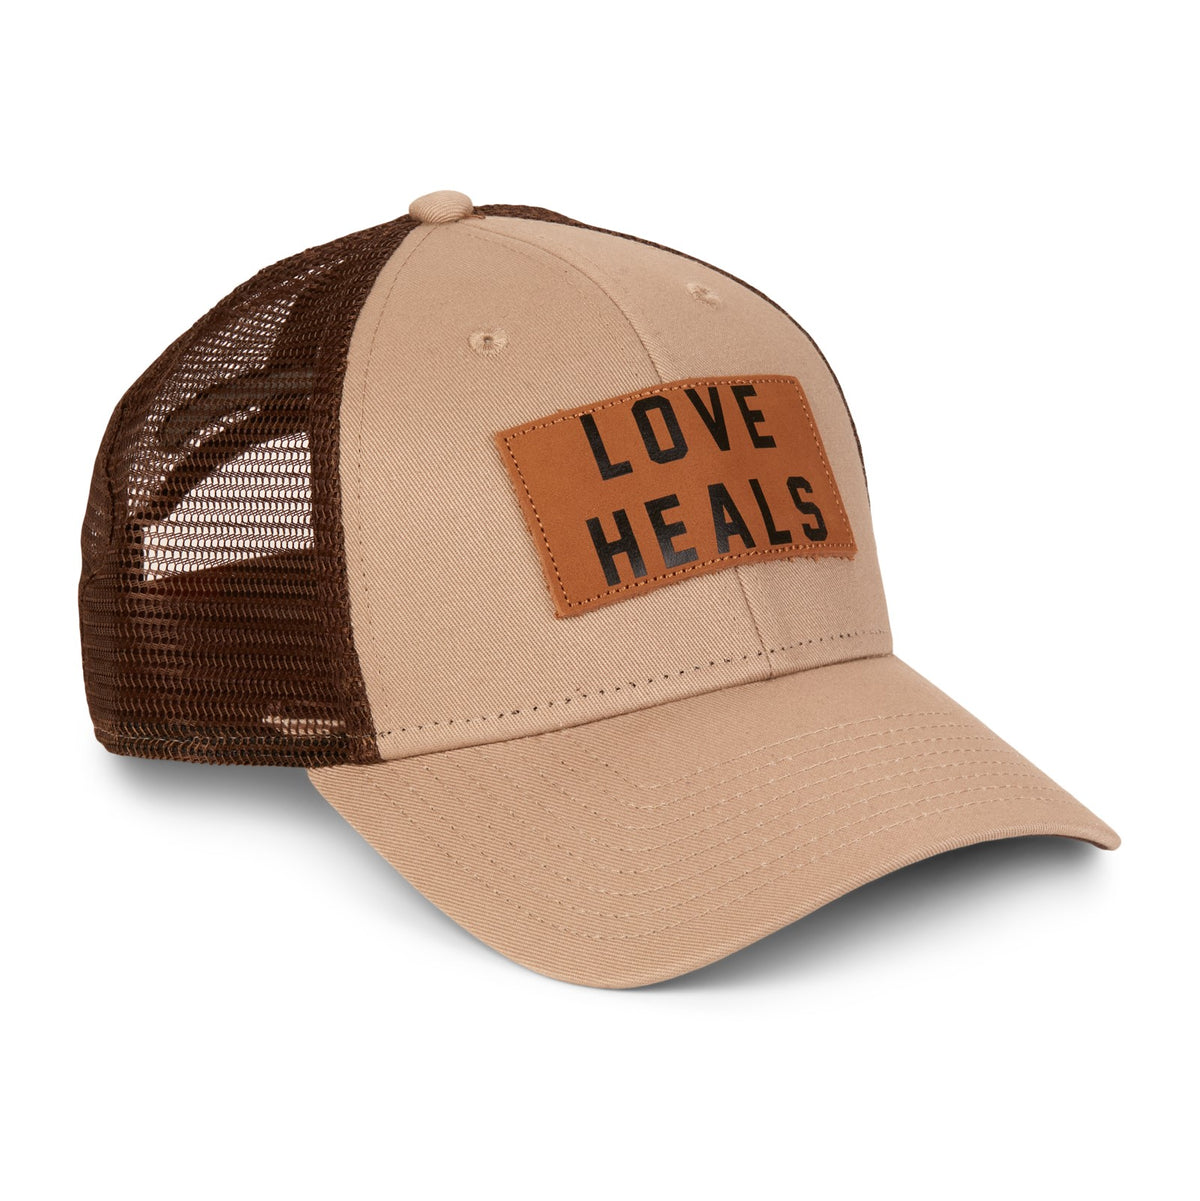 Love Heals Tan Hat